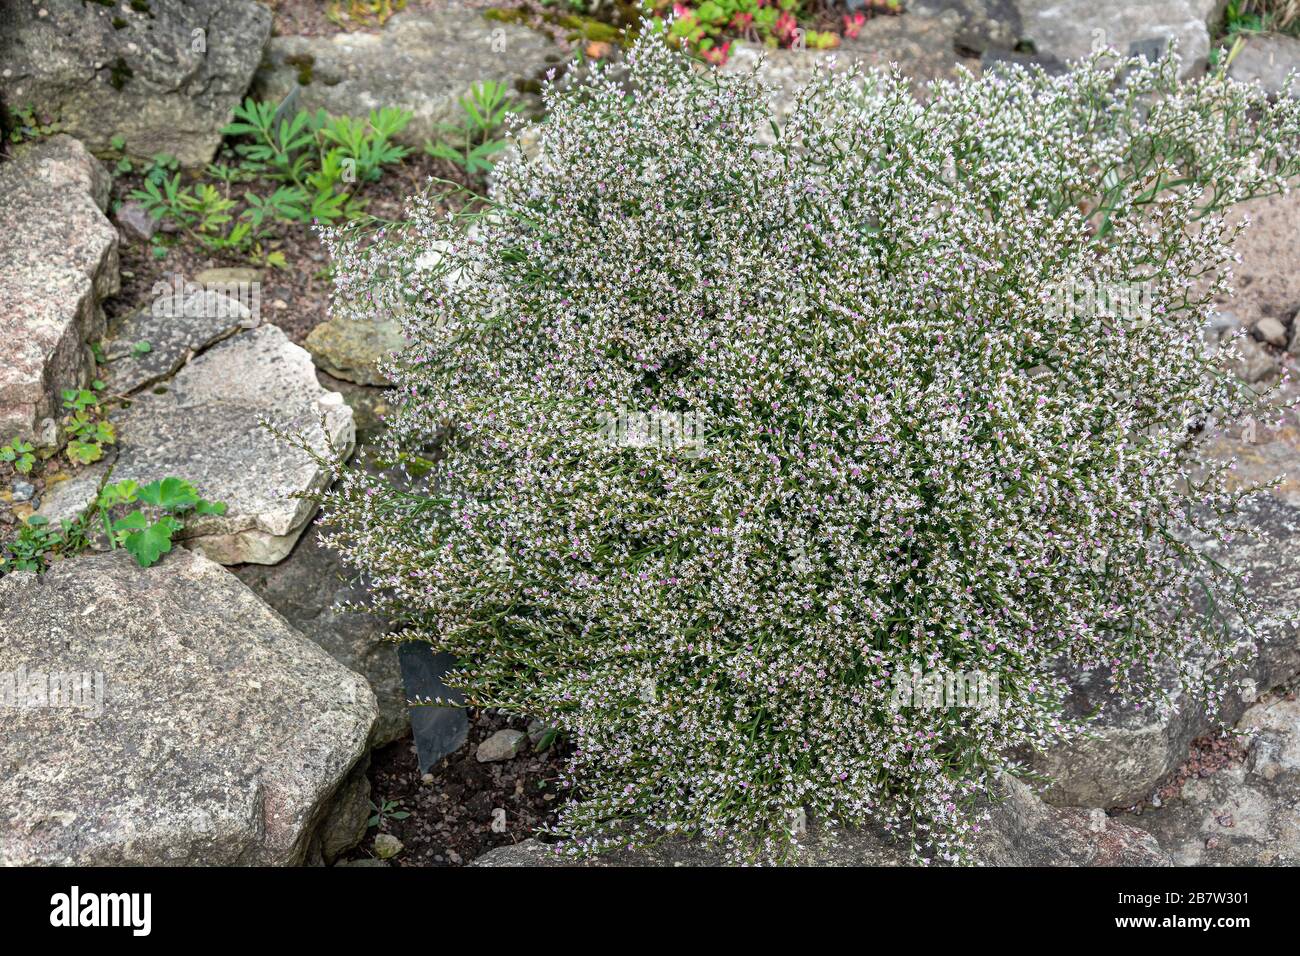 Flowering Bush Cimicifuga racemosa on a rock Stock Photo